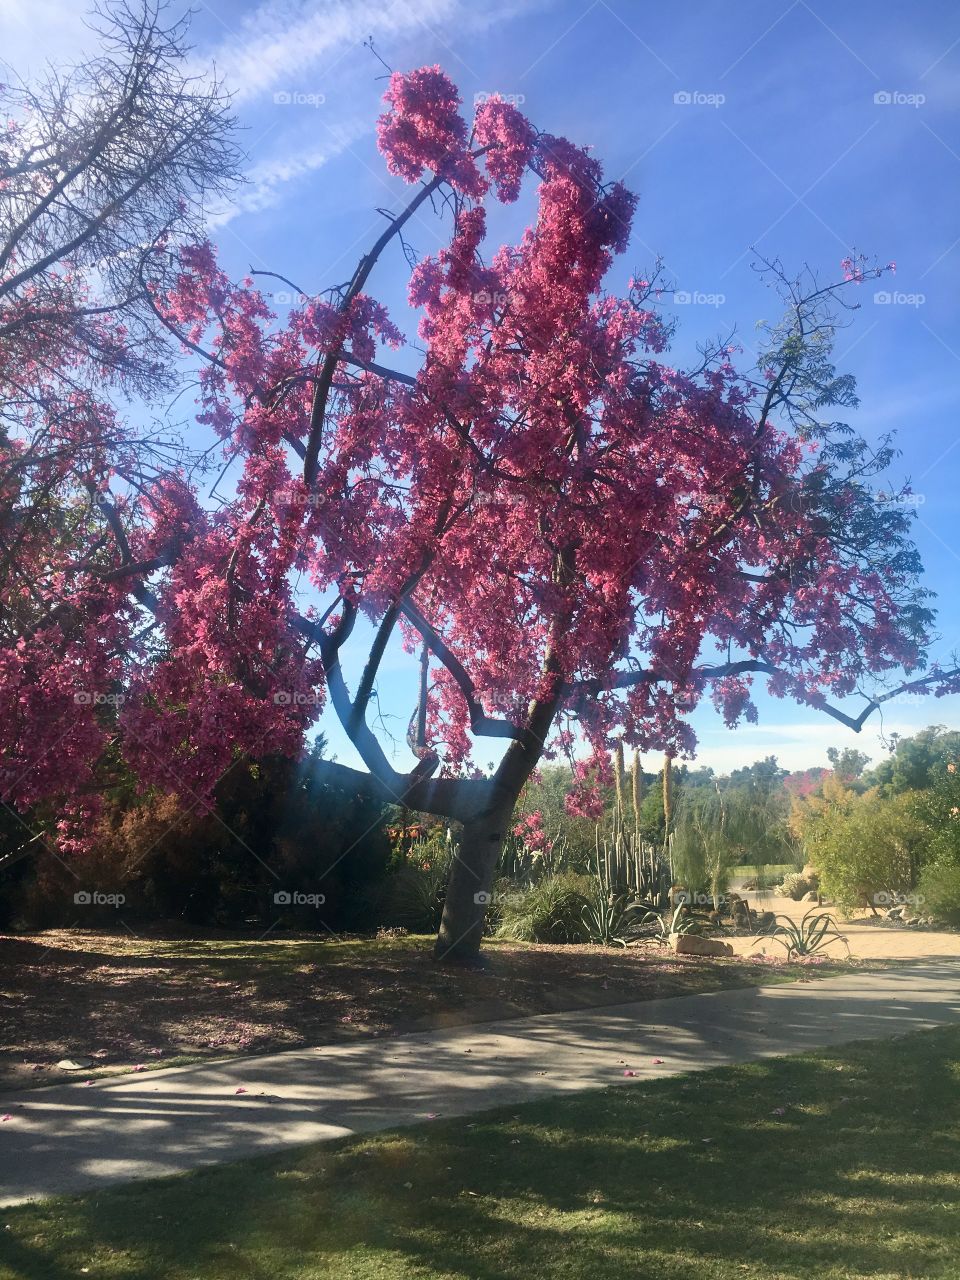 Los Angeles Arboretum and Botanical Garden